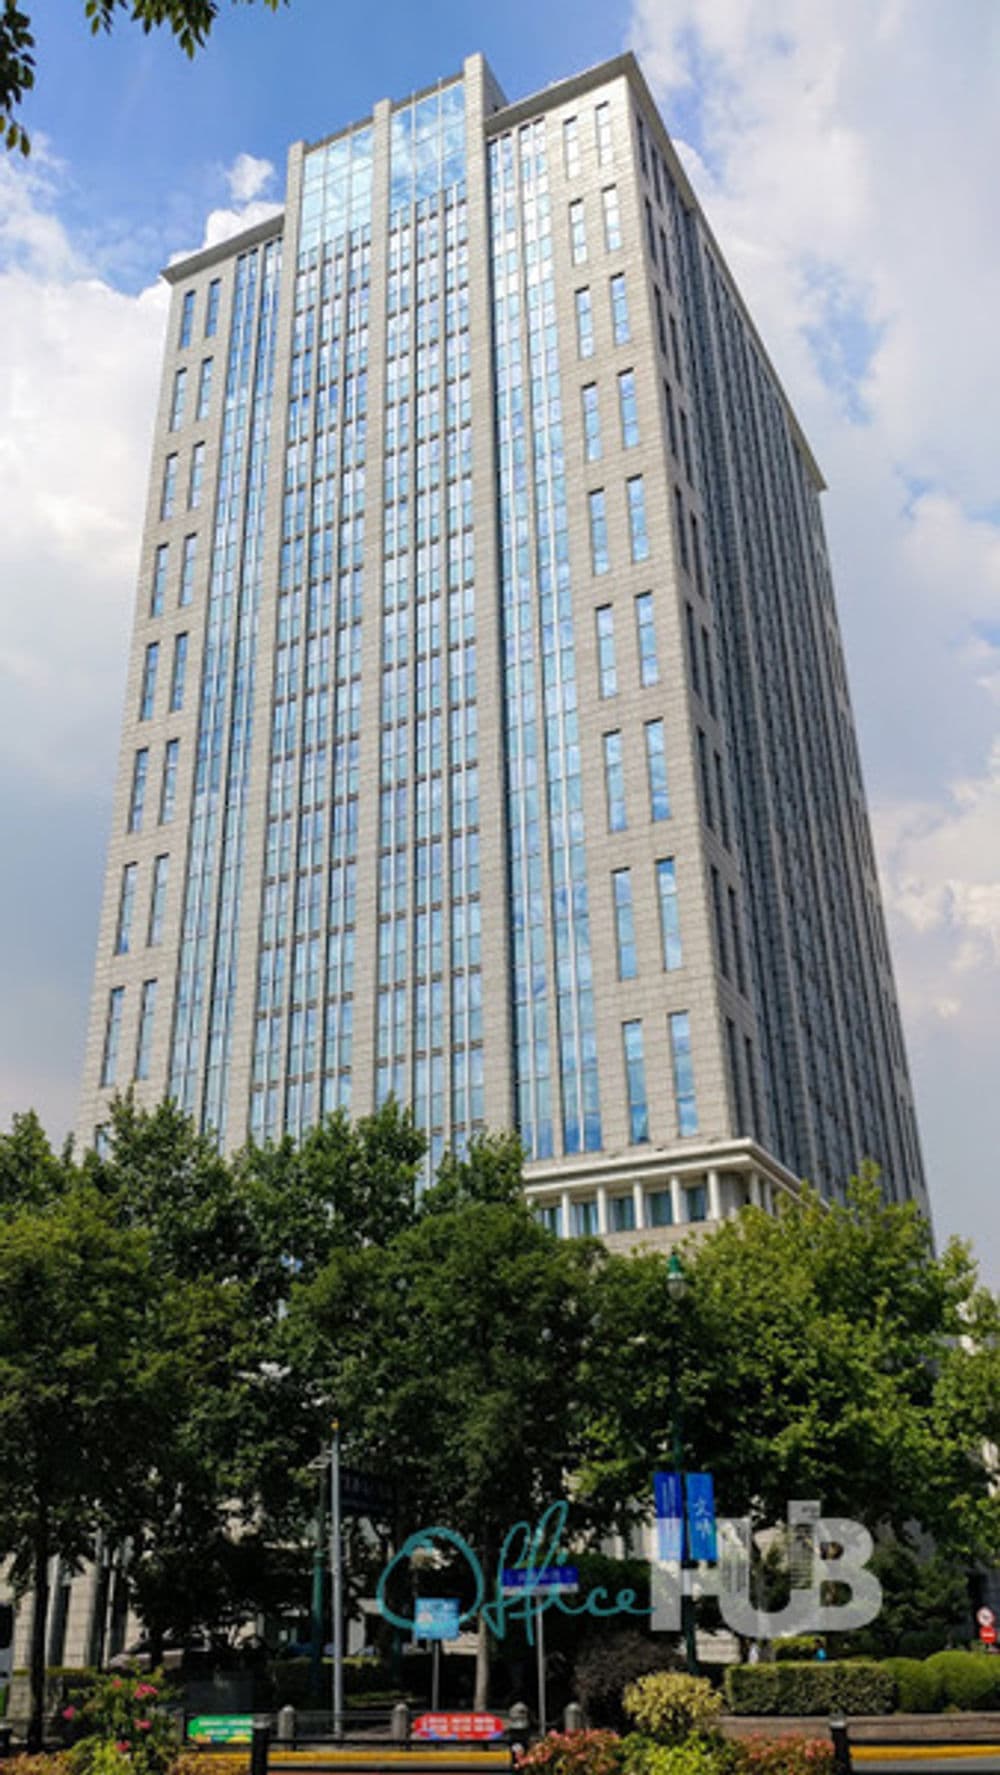 The Headquarters Building